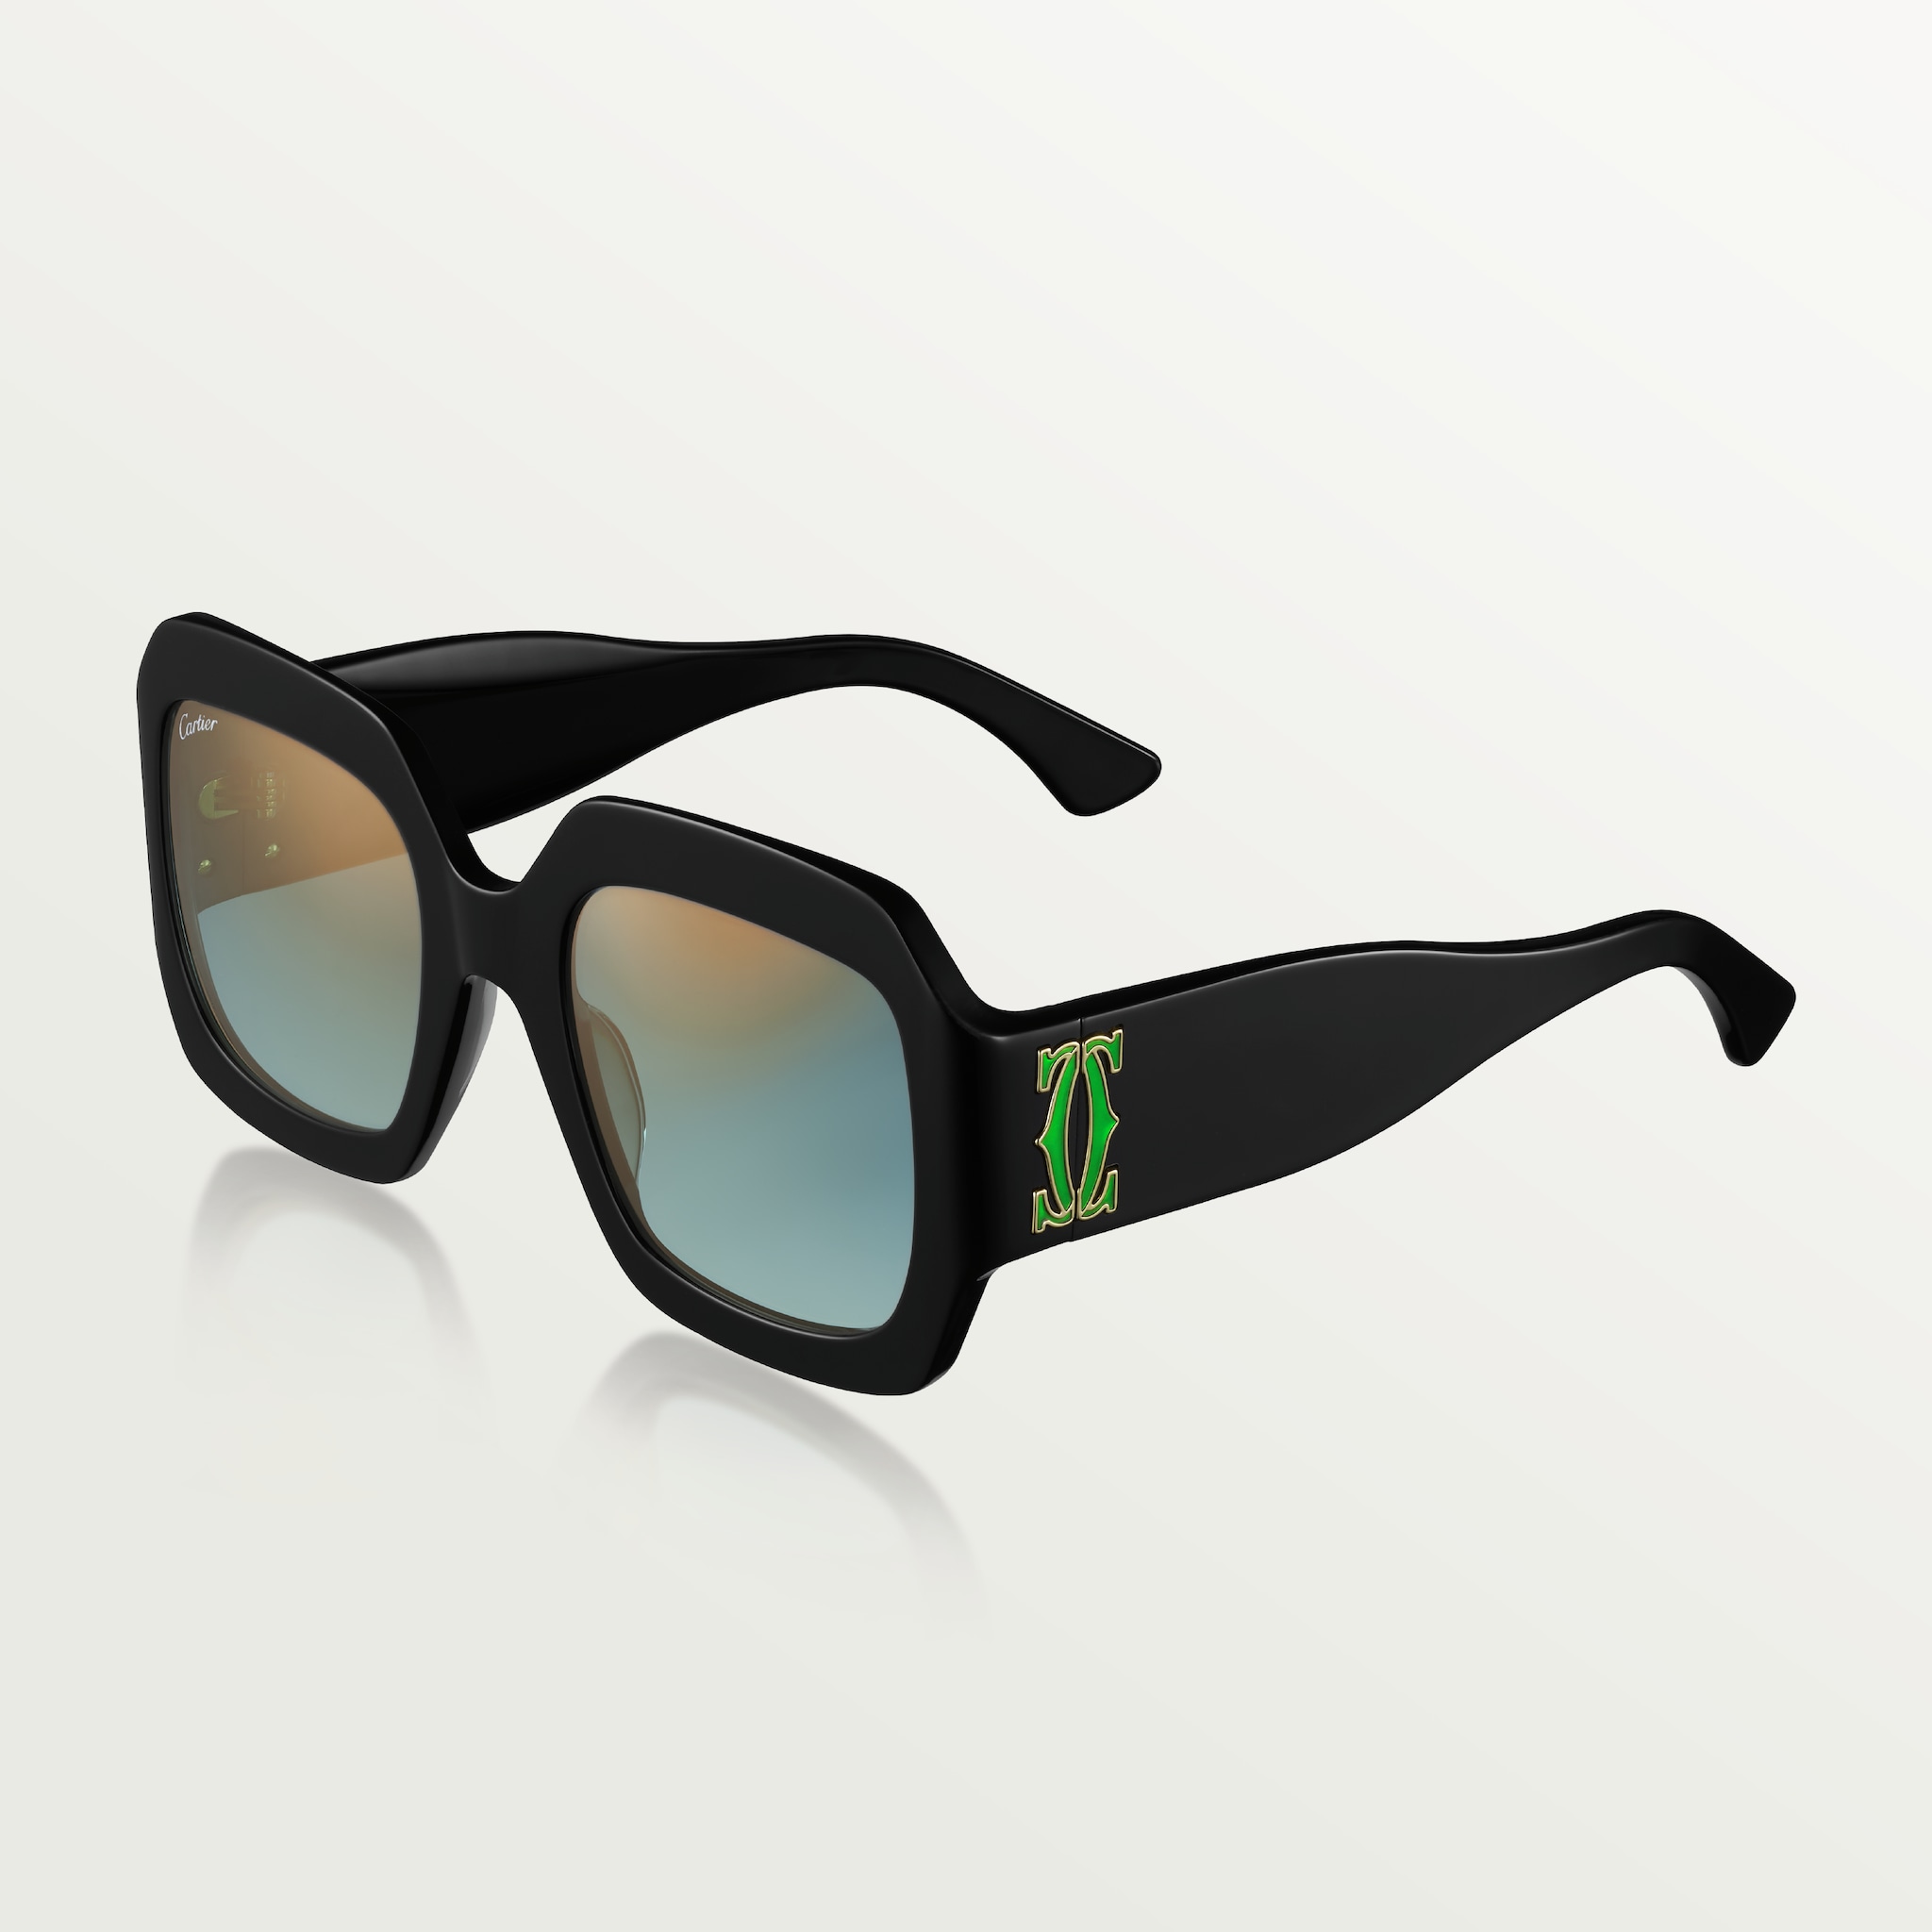 Double C de Cartier SunglassesBlack acetate, graduated green lenses